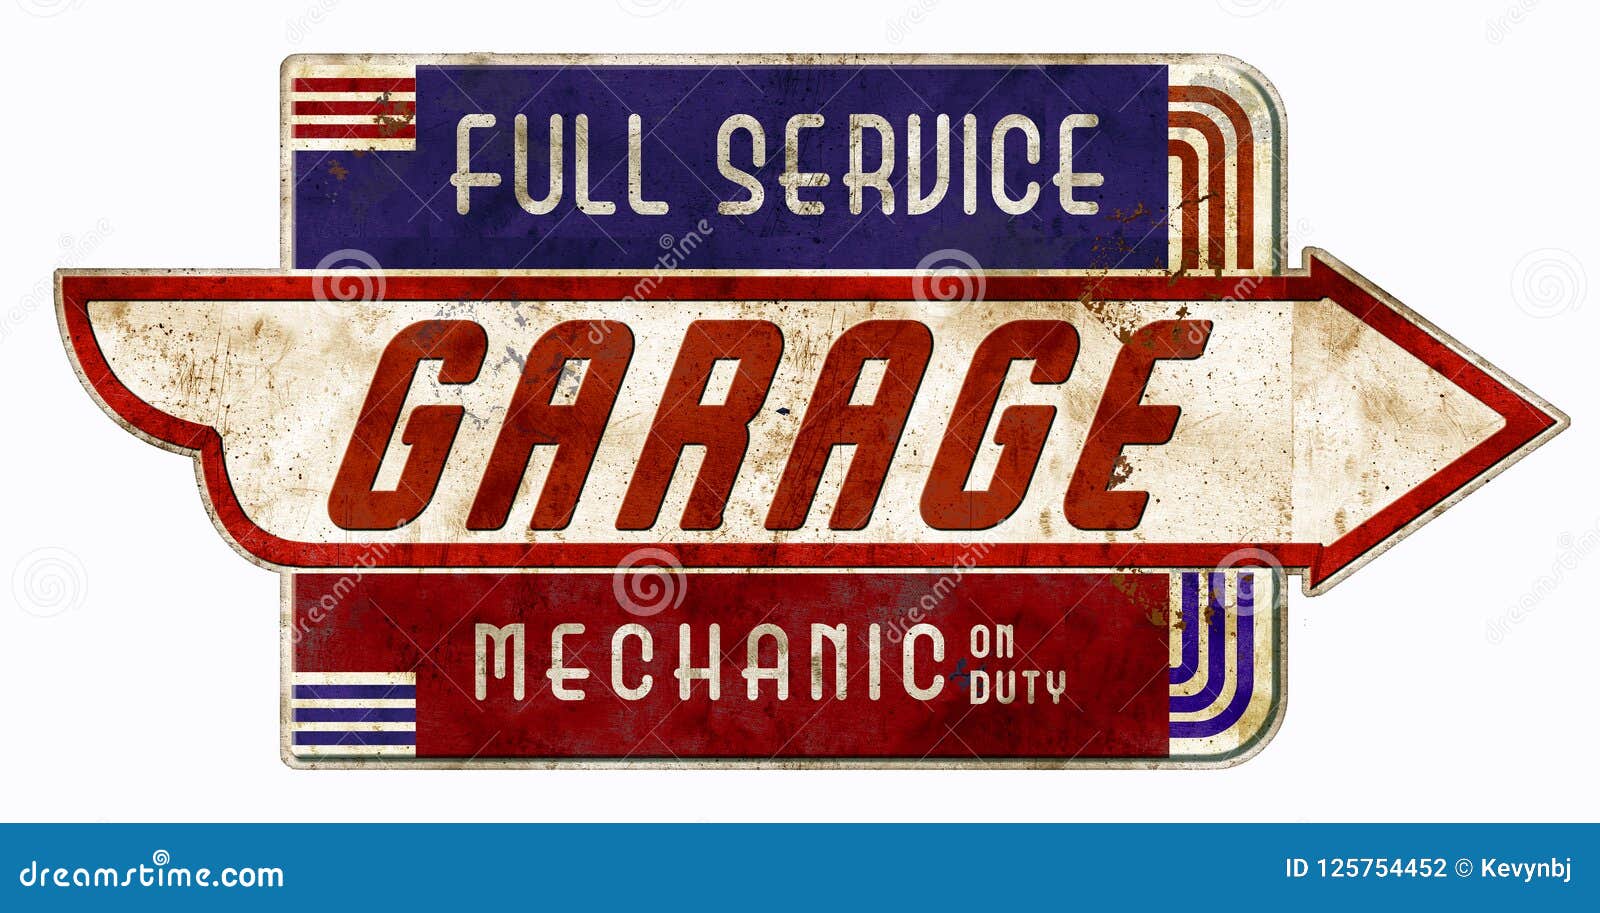 mechanic on duty sign retro vintage garage